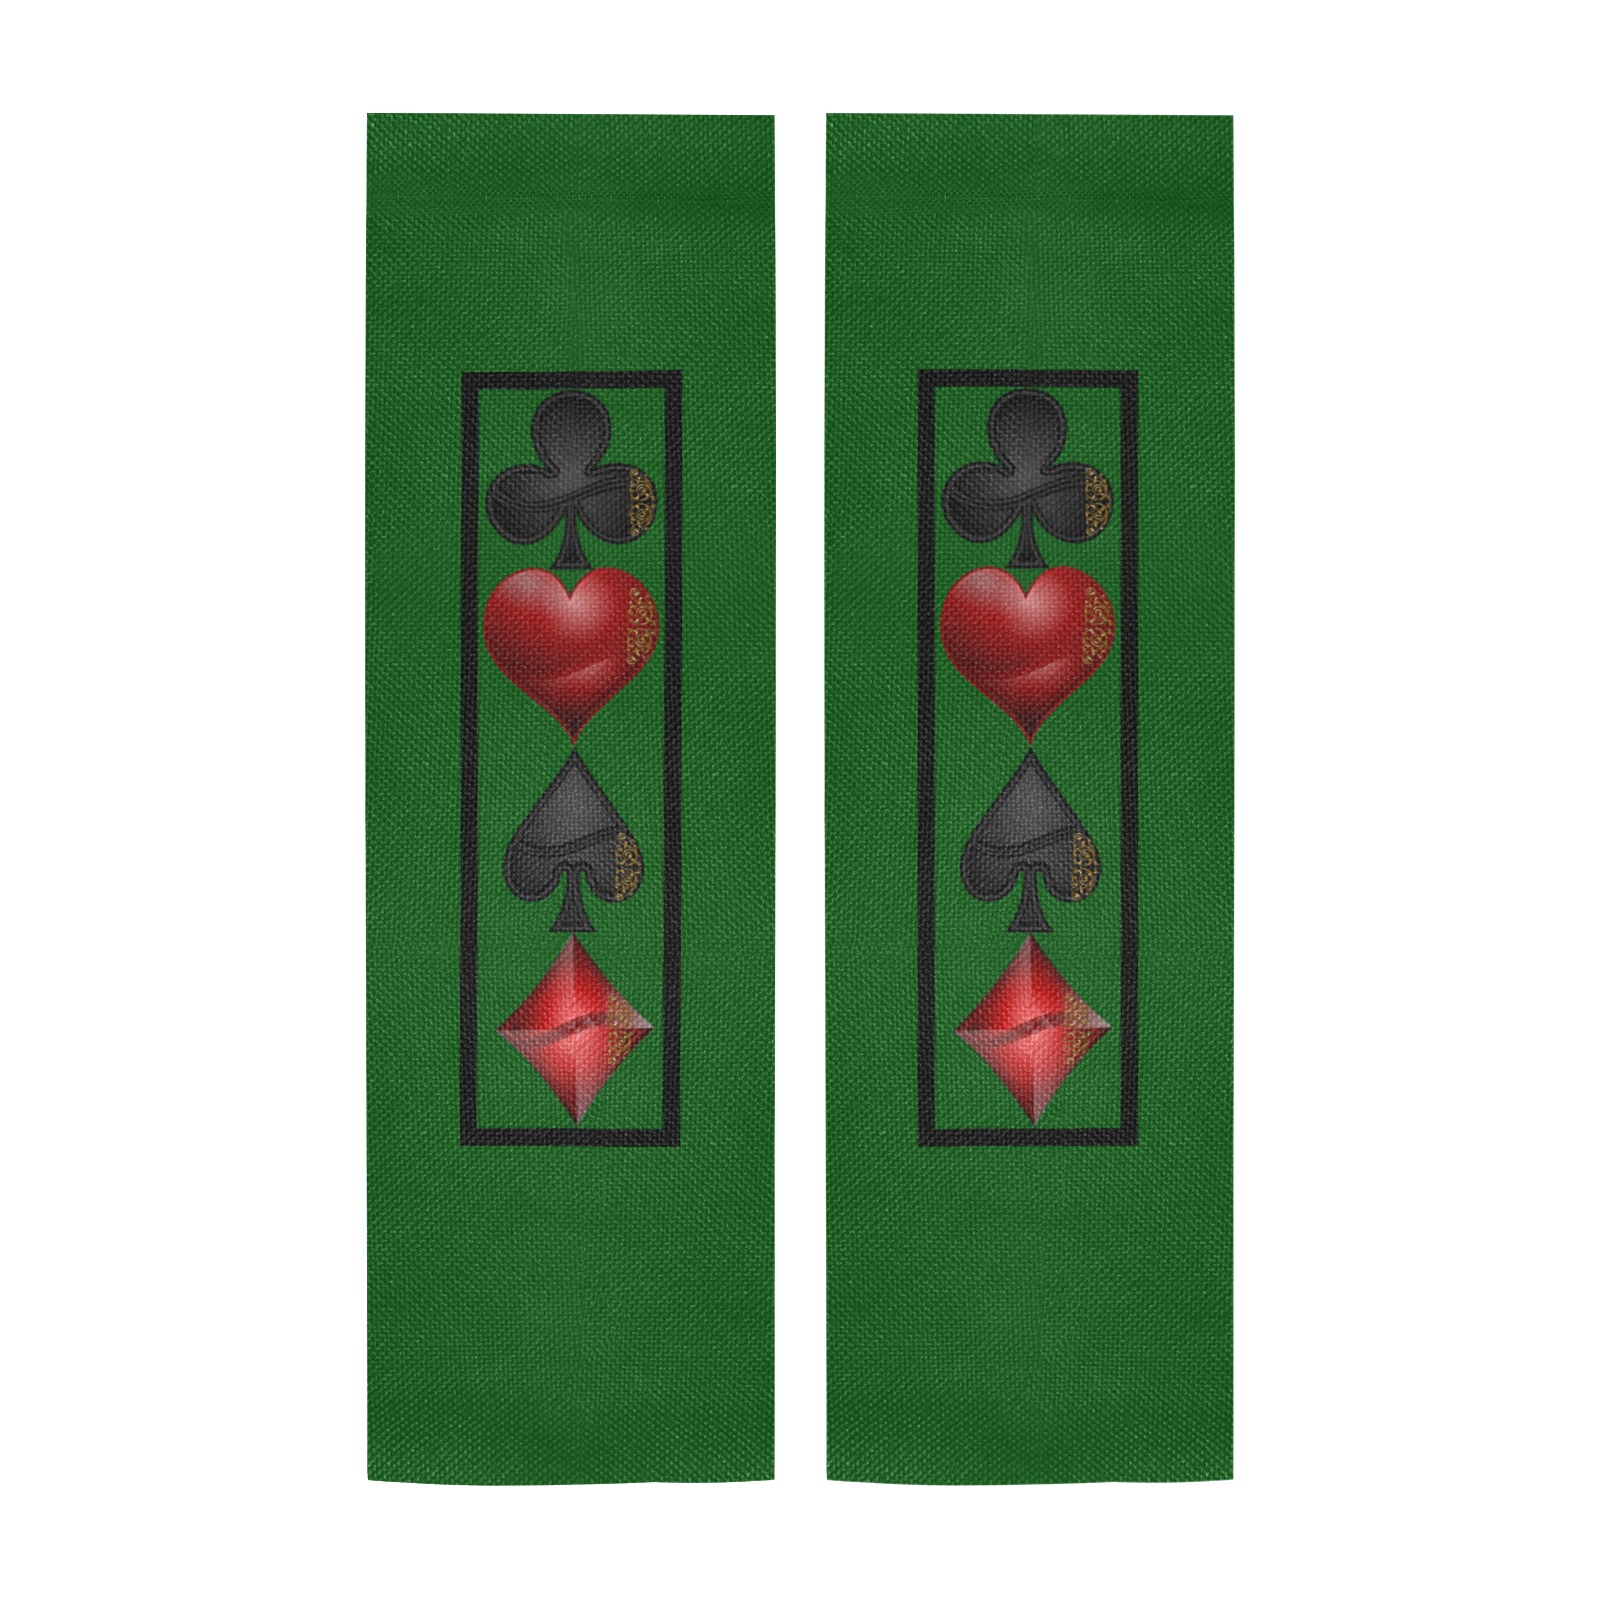 Las Vegas Playing Card Symbols / Green Door Curtain Tapestry